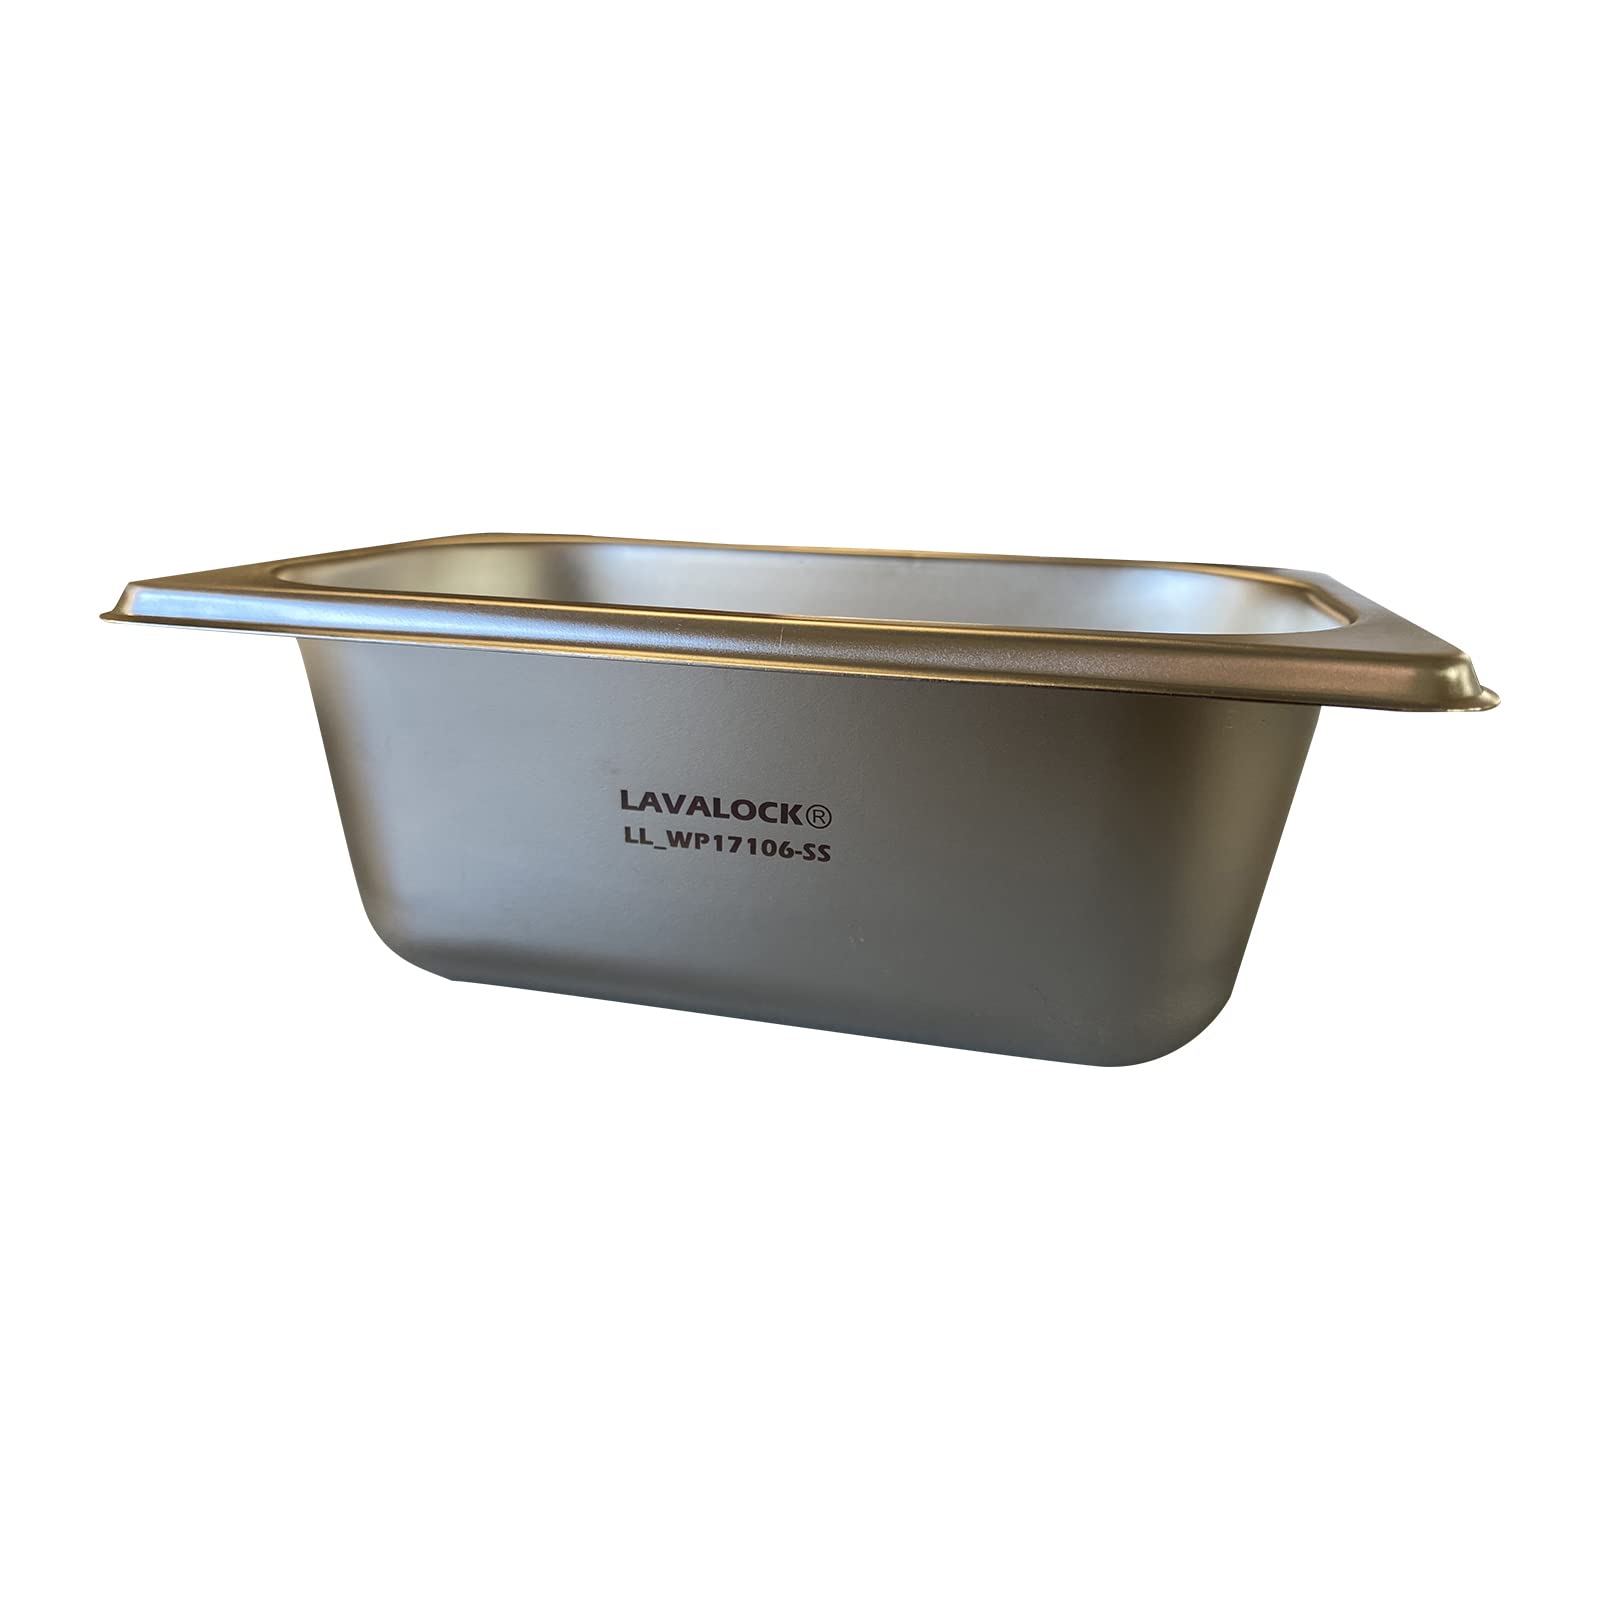 LavaLock 7-3/8" x 4-3/8" x 2-1/2" Stainless Steel Water Pan, (7 x 4 x 3) Grease Pan, Drip Pan, Food Serving Tray